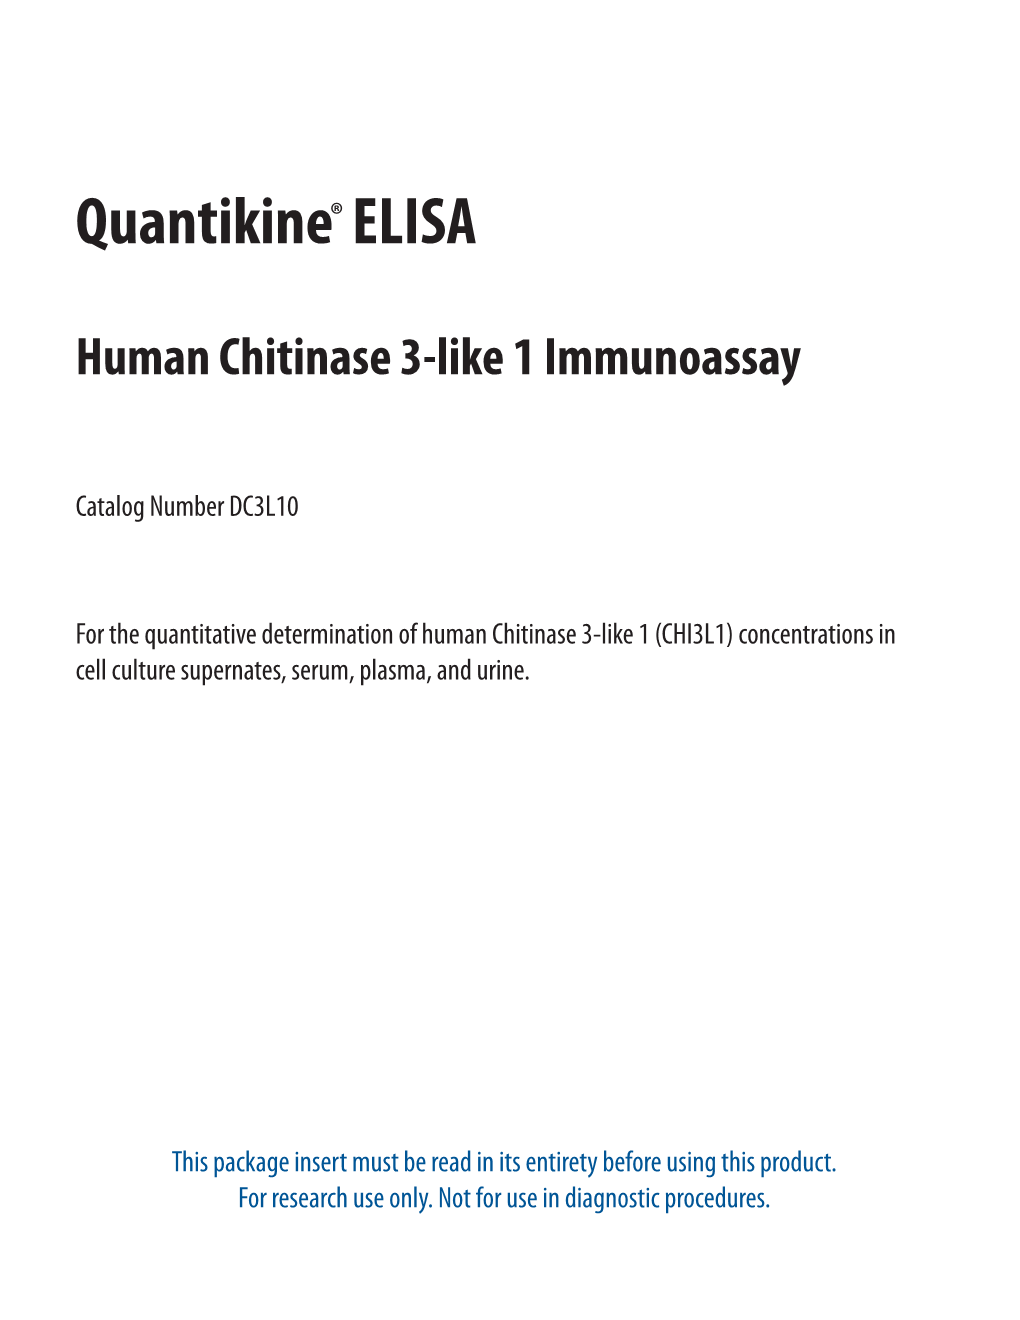 Human Chitinase 3-Like 1 Quantikine